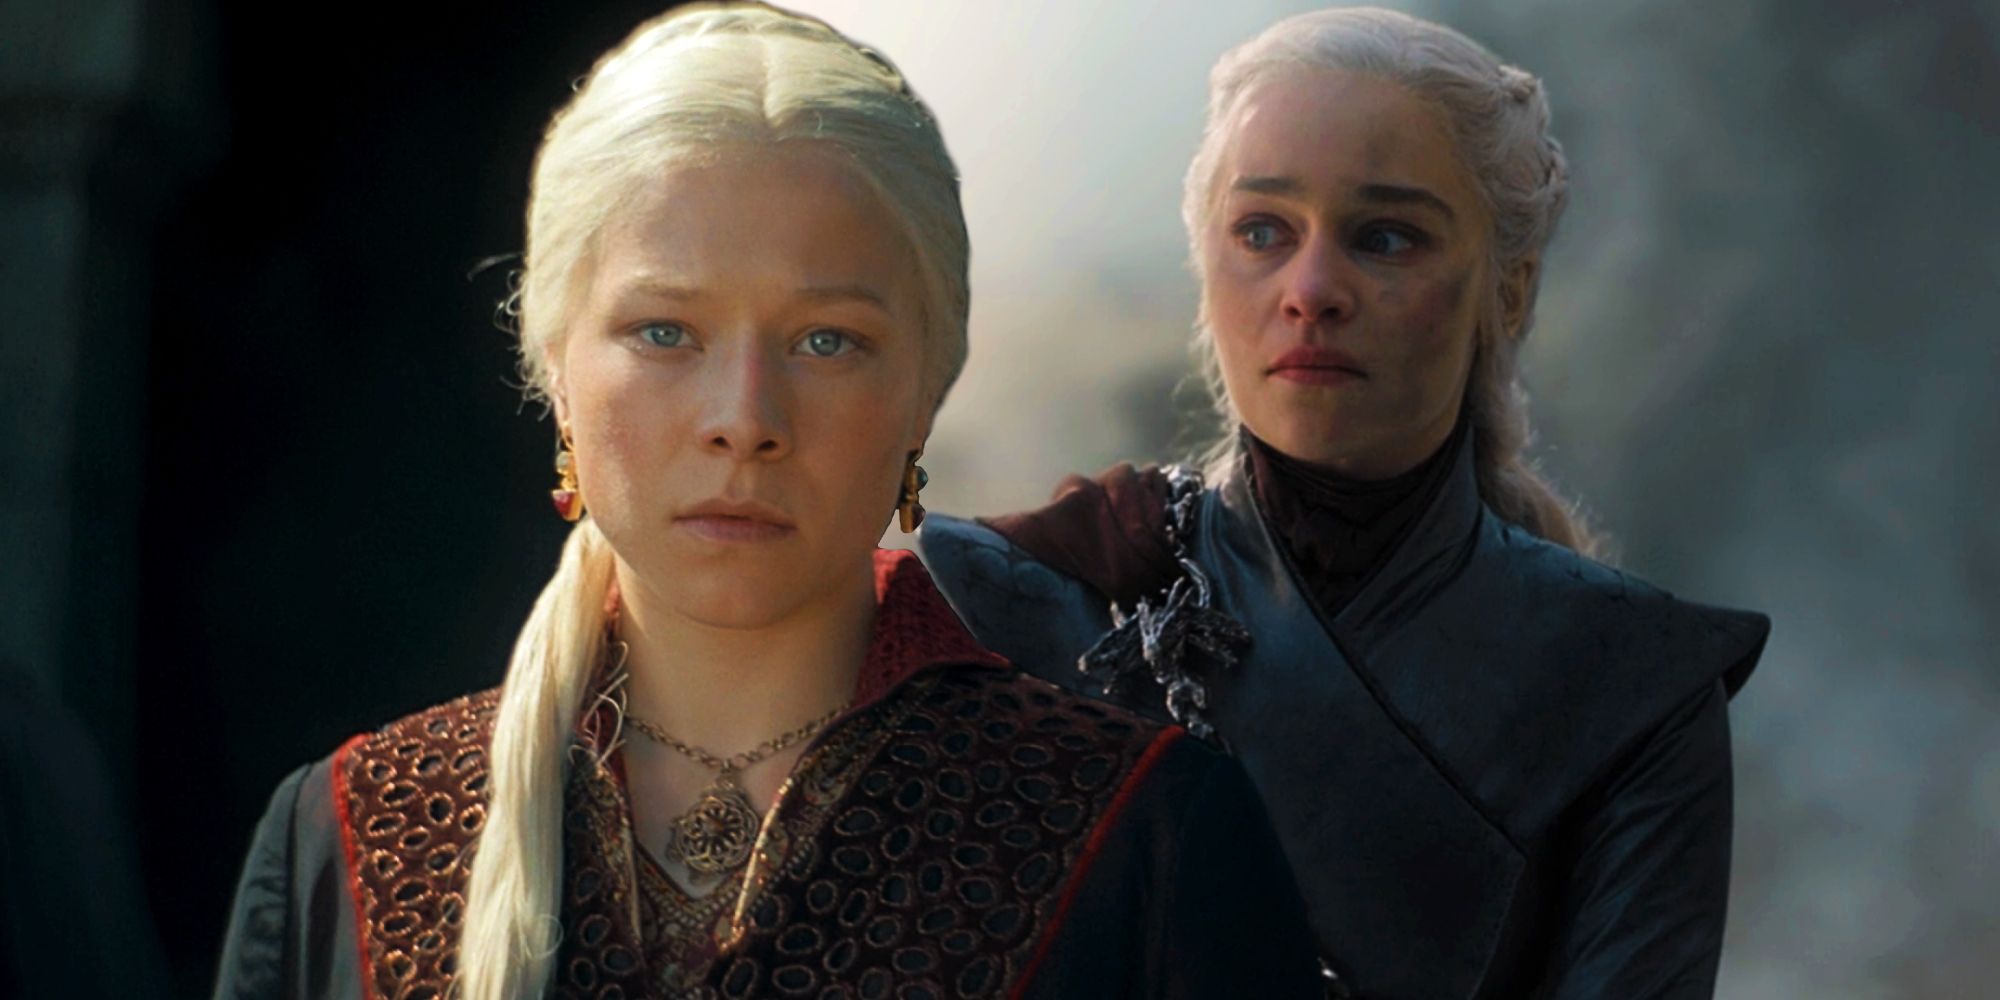 Emma D'Arcy as Rhaenyra Targaryen and Emilia Clarke as Daenerys Targaryen